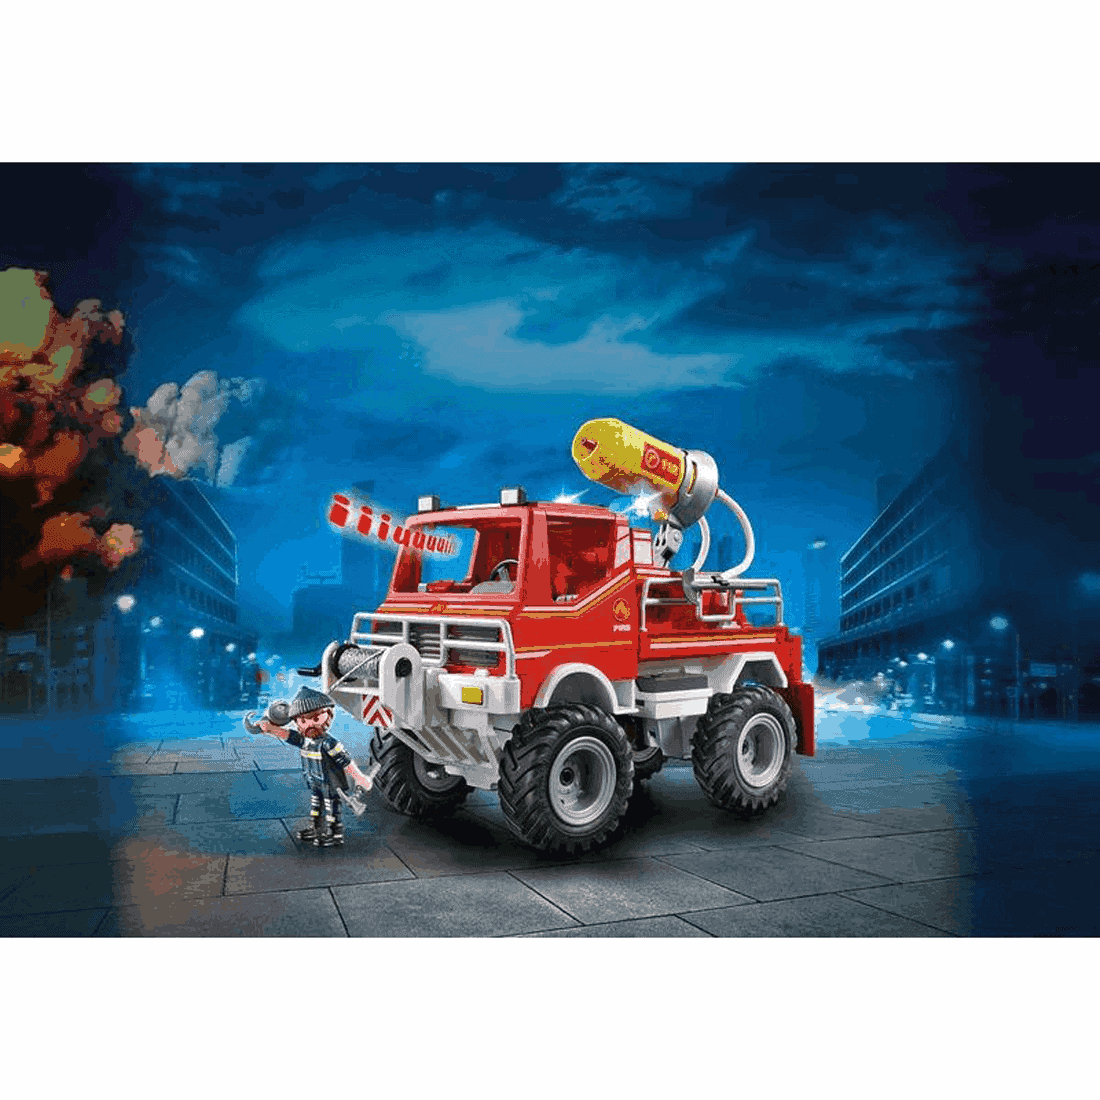 Playmobil - Όχημα Πυροσβεστικής Με Τροχαλία Ρυμούλκησης